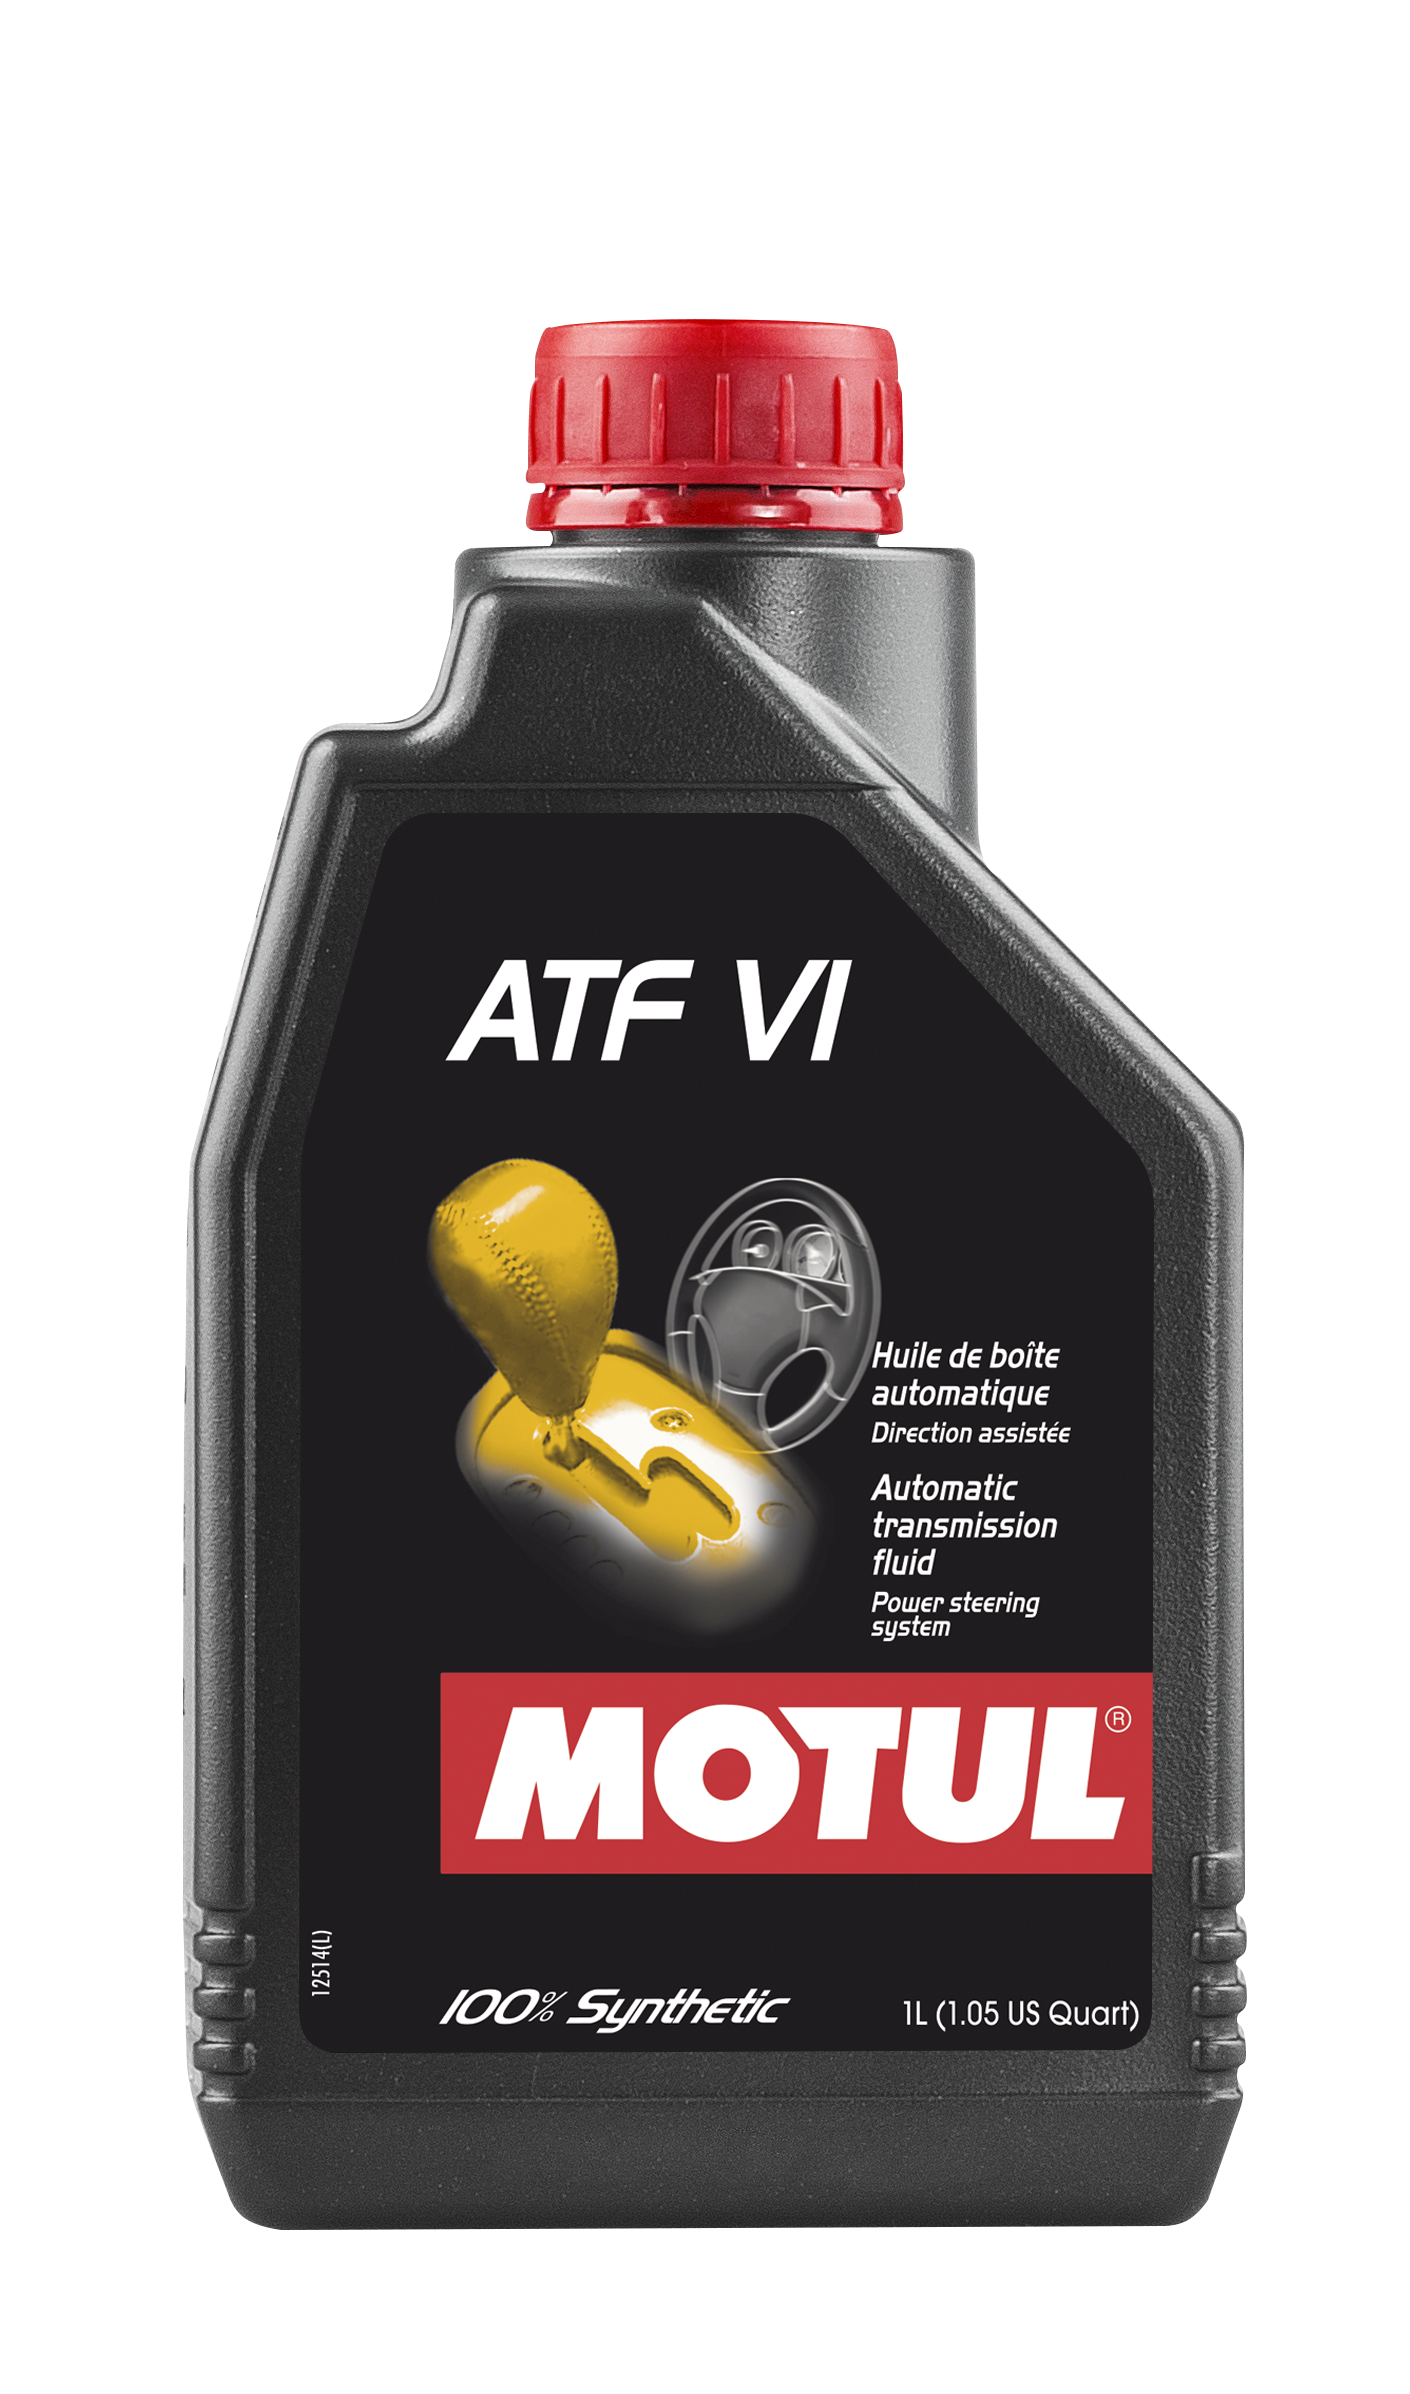 Motul ATF VI, 1 liter